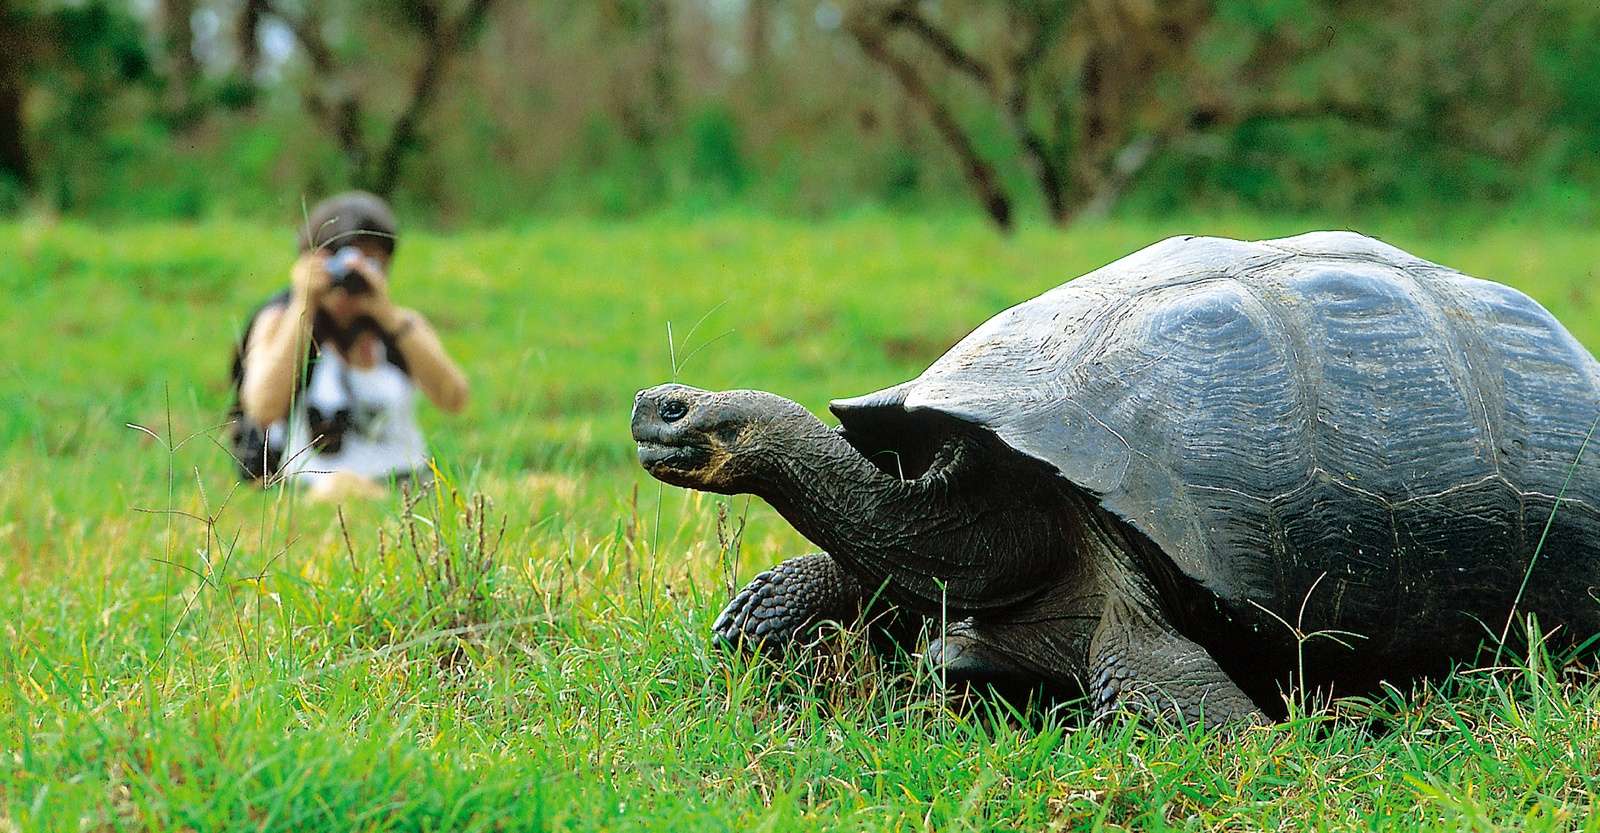 Nat Hab guest and giant tortoise, Santa Cruz Island, Galapagos, Ecuador.